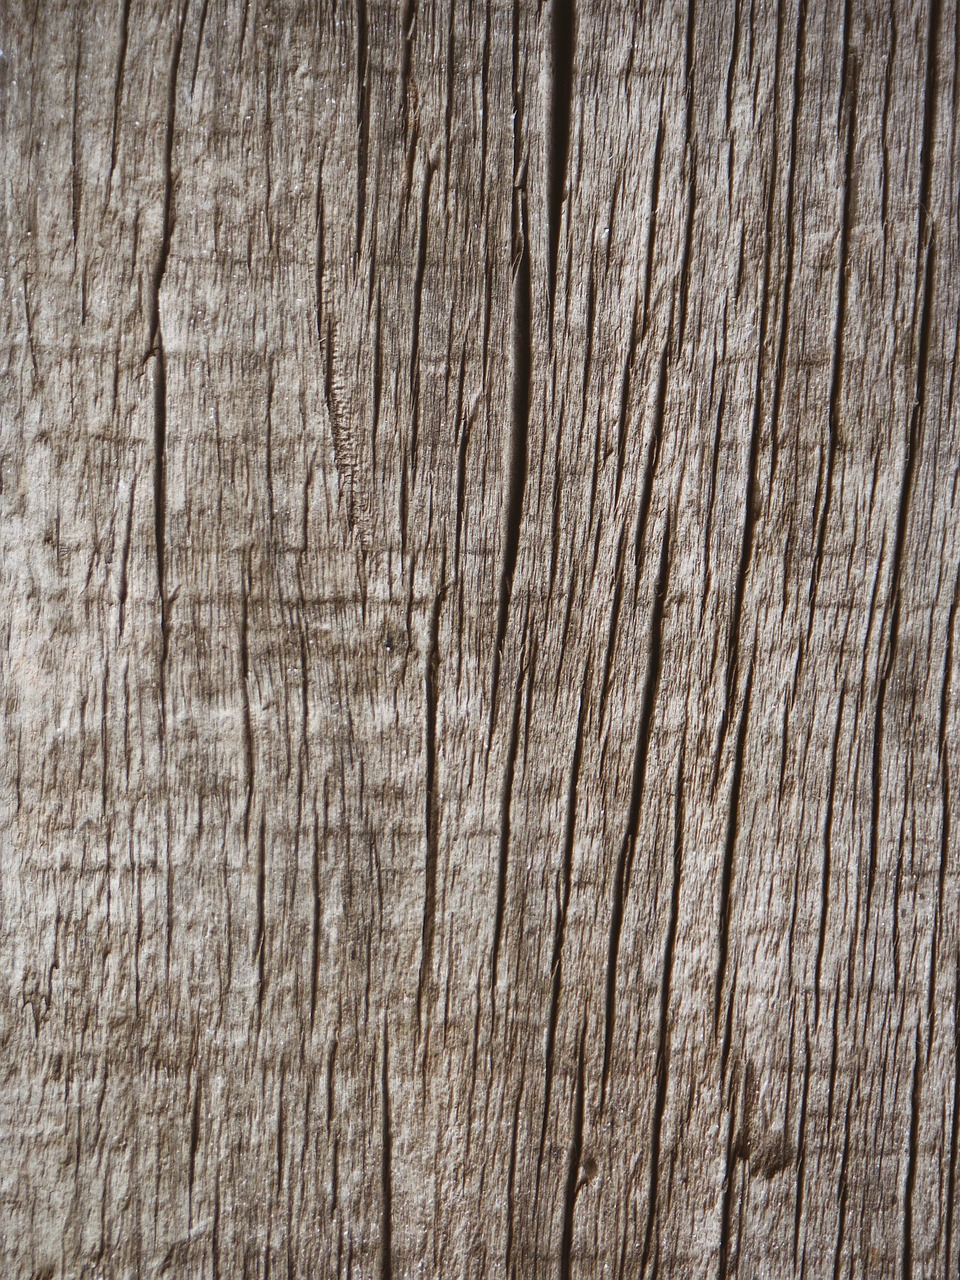 wood texture background free photo